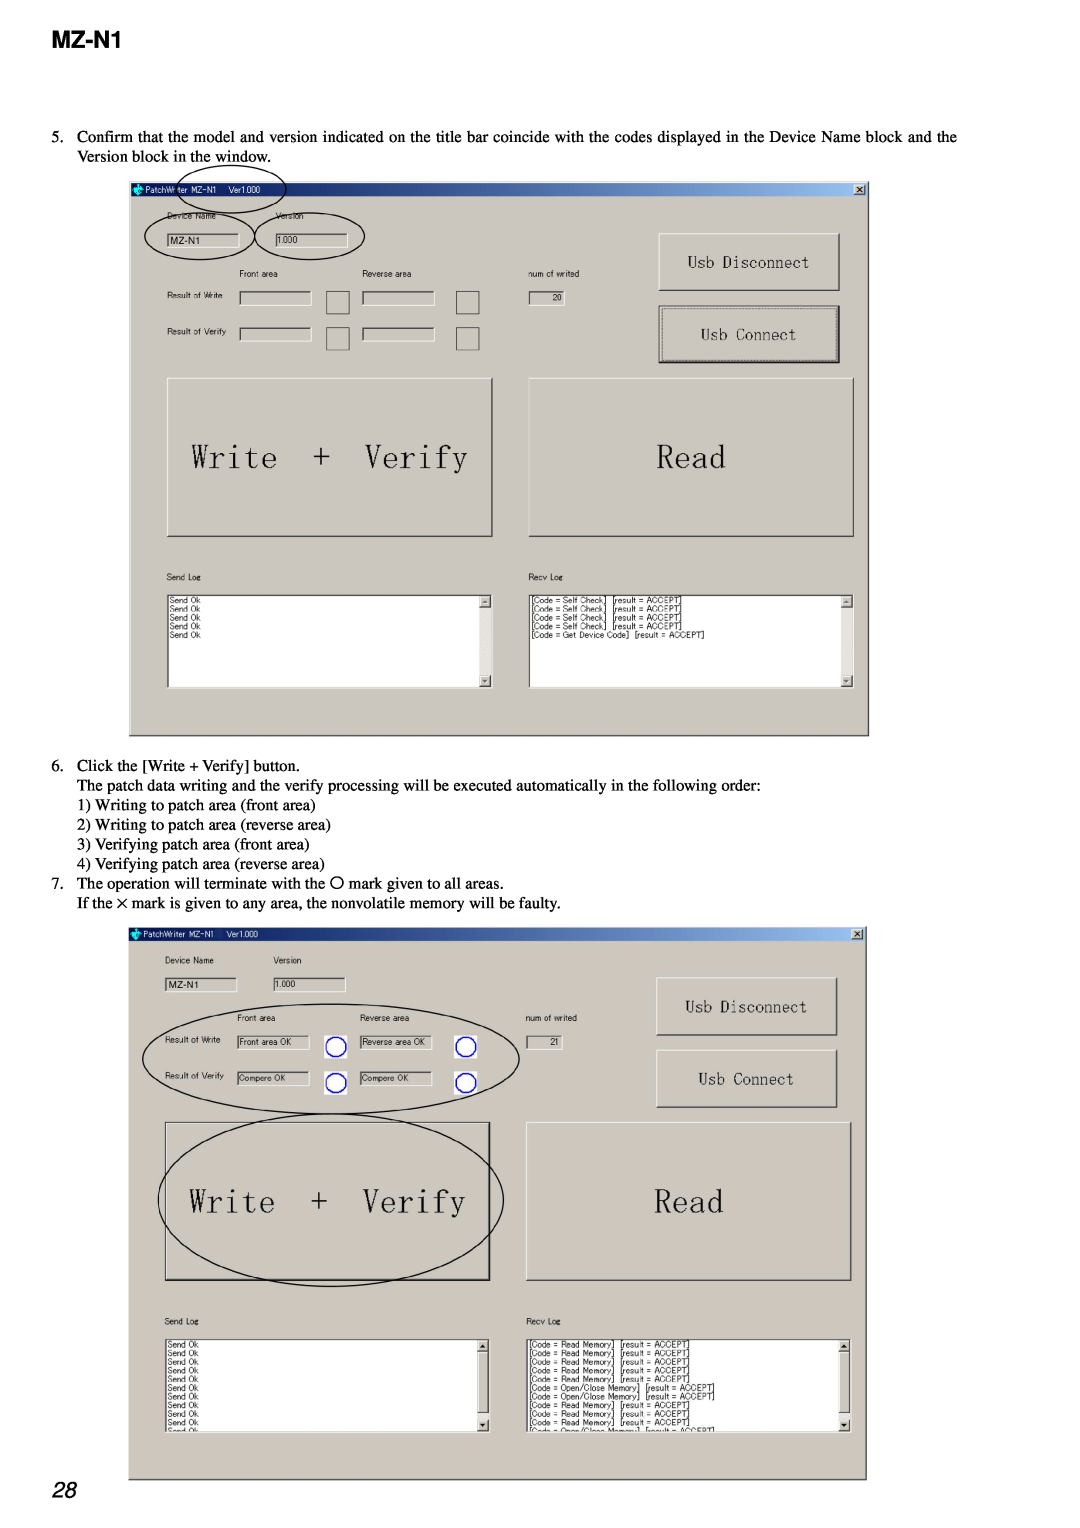 Sony MZ-N1 service manual Click the Write + Verify button 